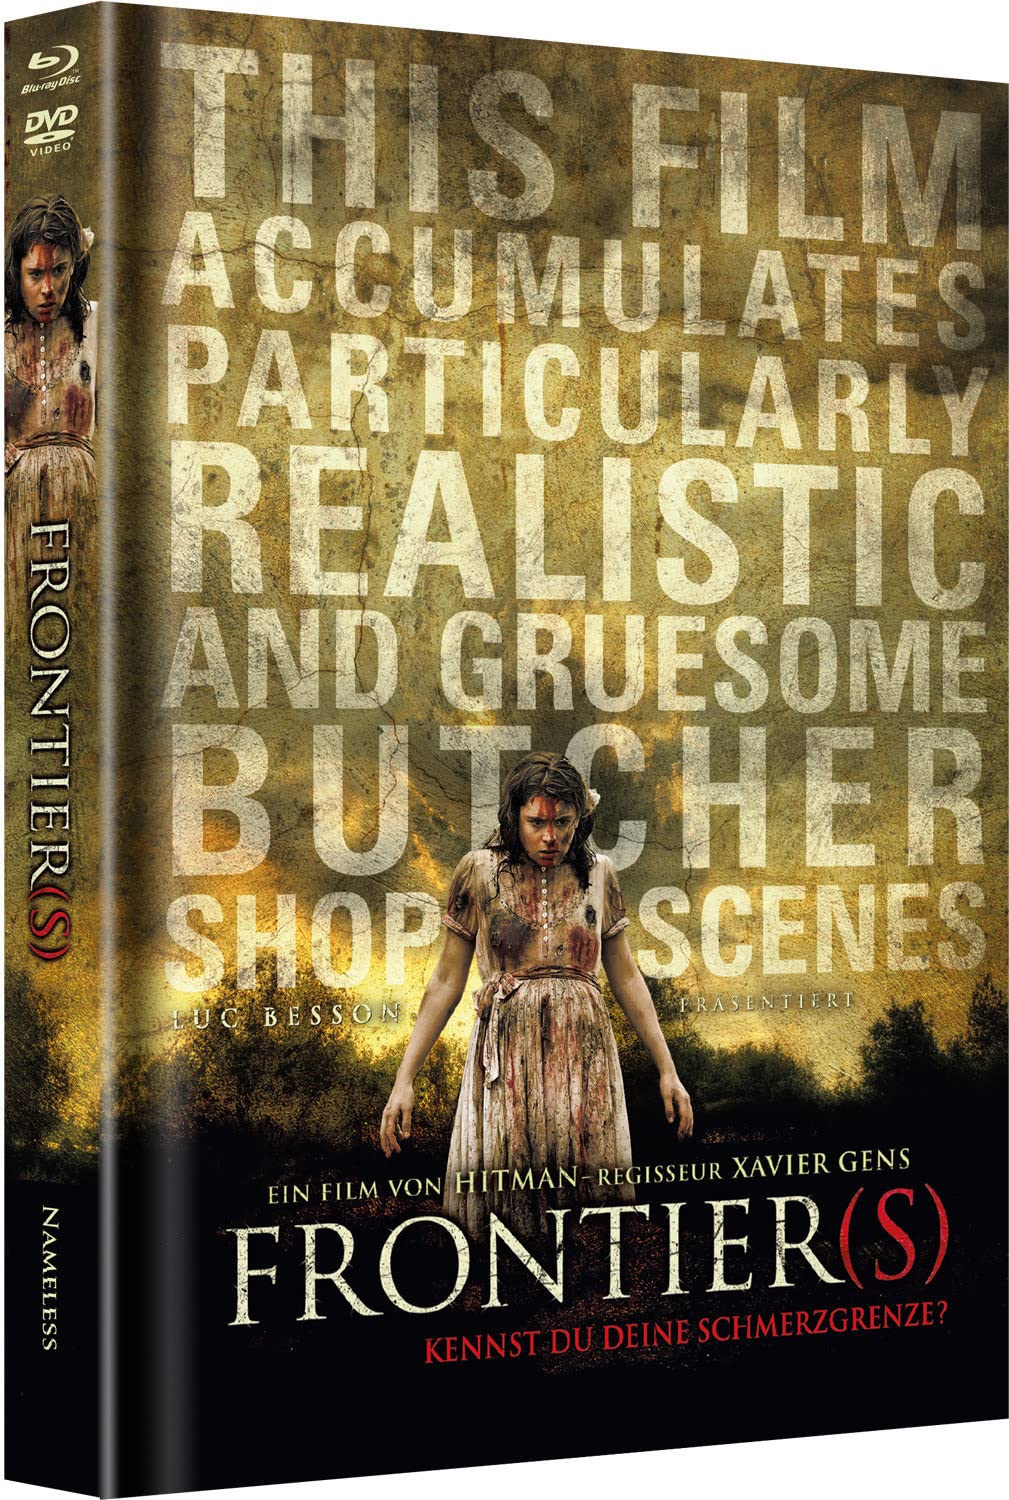 Frontiers - Mediabook wattiert - Cover D - Limited Edition auf 500 Stück (+ Bonus-DVD) [Blu-ray]